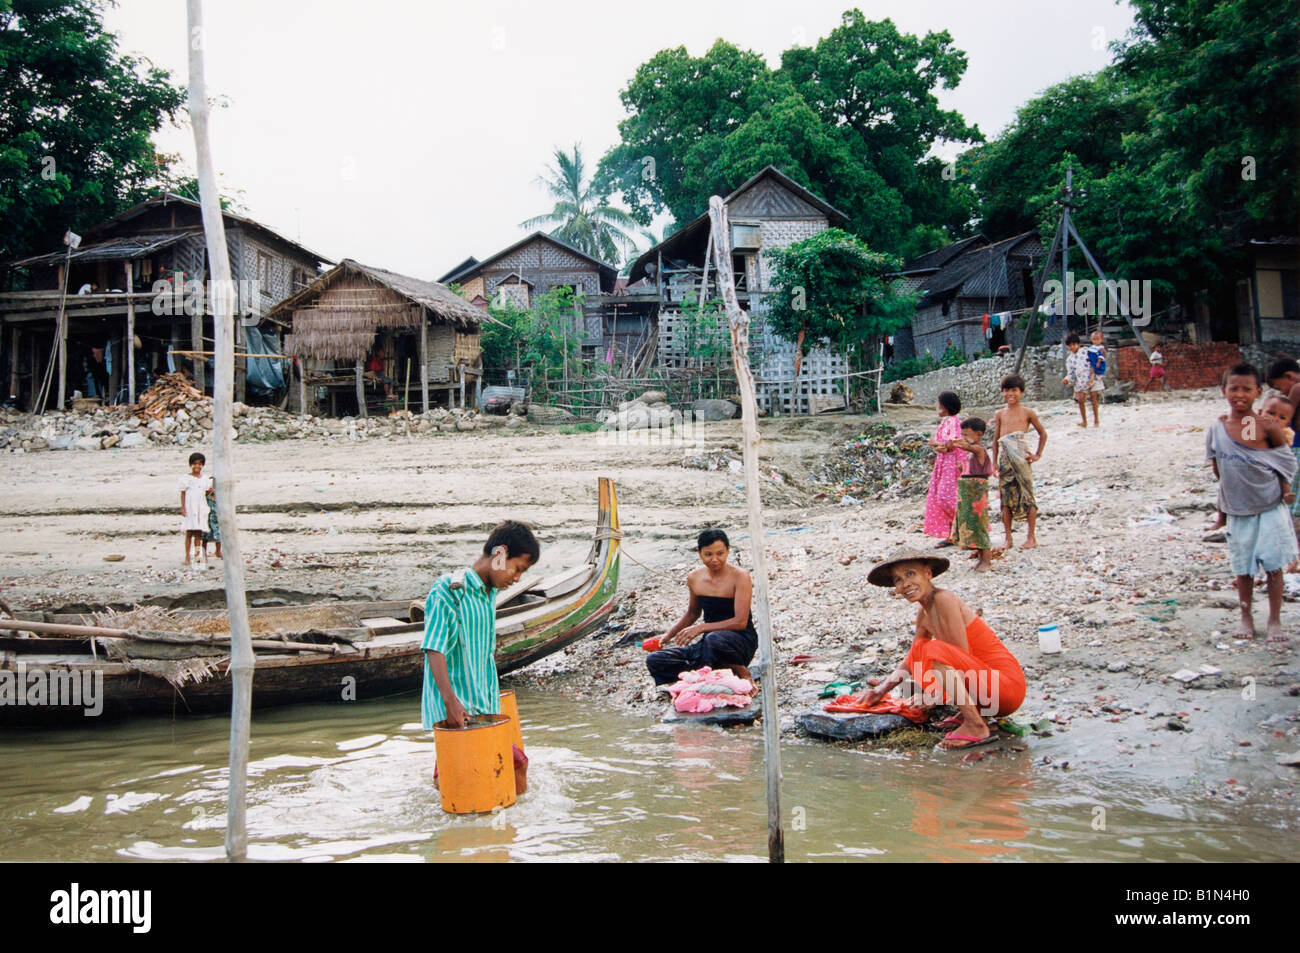 https://c8.alamy.com/comp/B1N4H0/myanmar-burma-sagaing-women-washing-clothes-in-the-ayeyarwaddy-river-B1N4H0.jpg